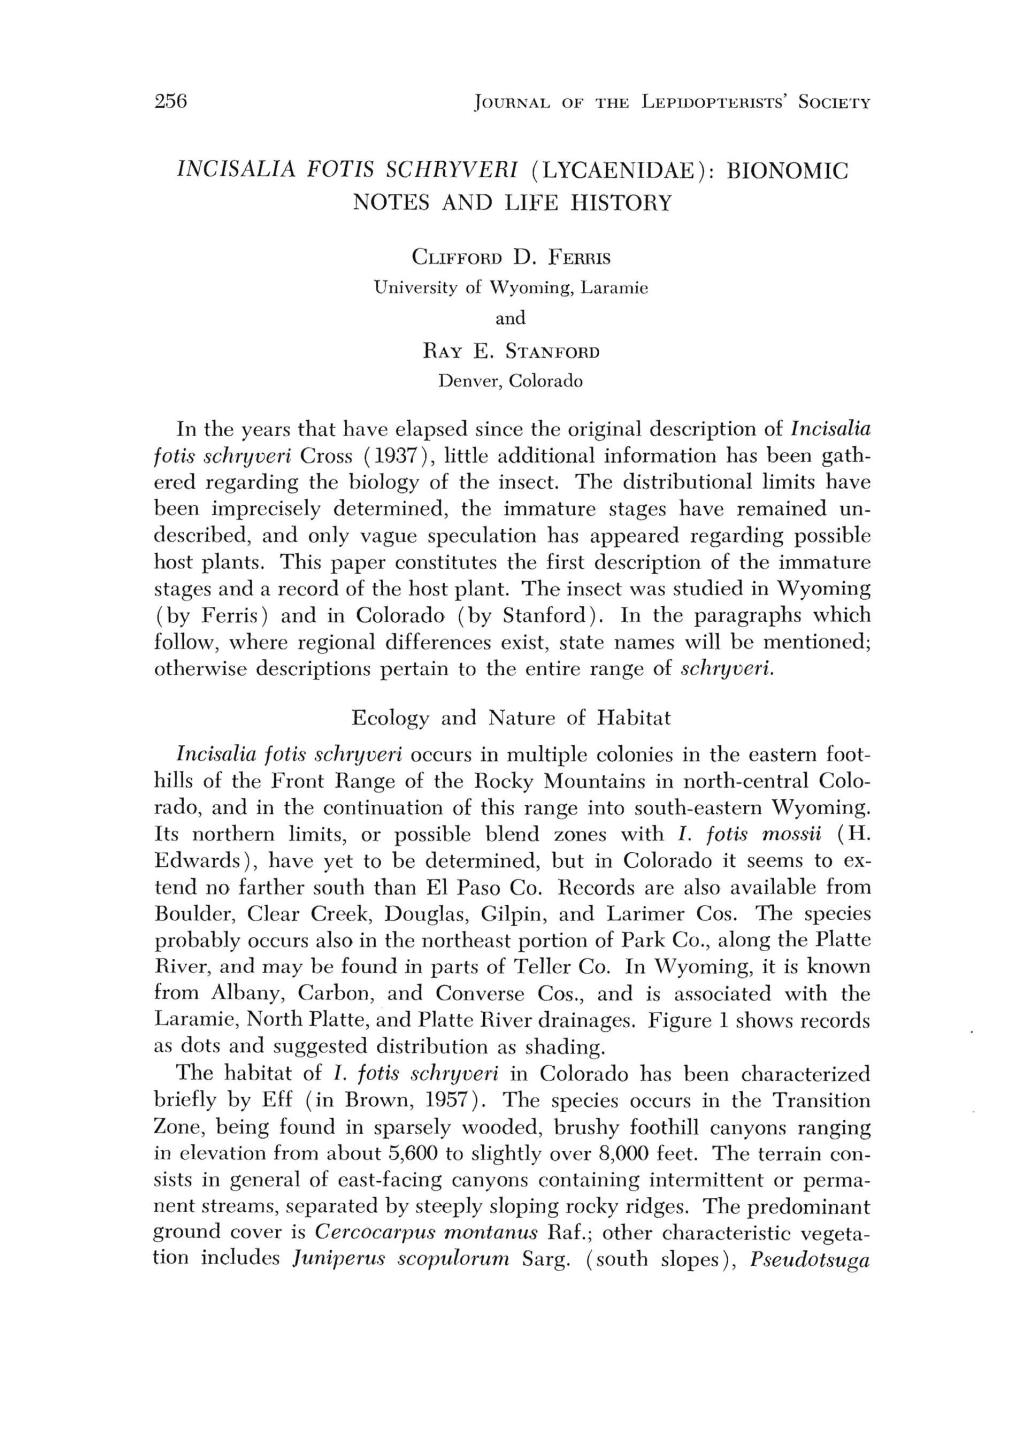 Incisalia Fotis Schryveri (Lycaenidae): Bionomic Notes and Life History